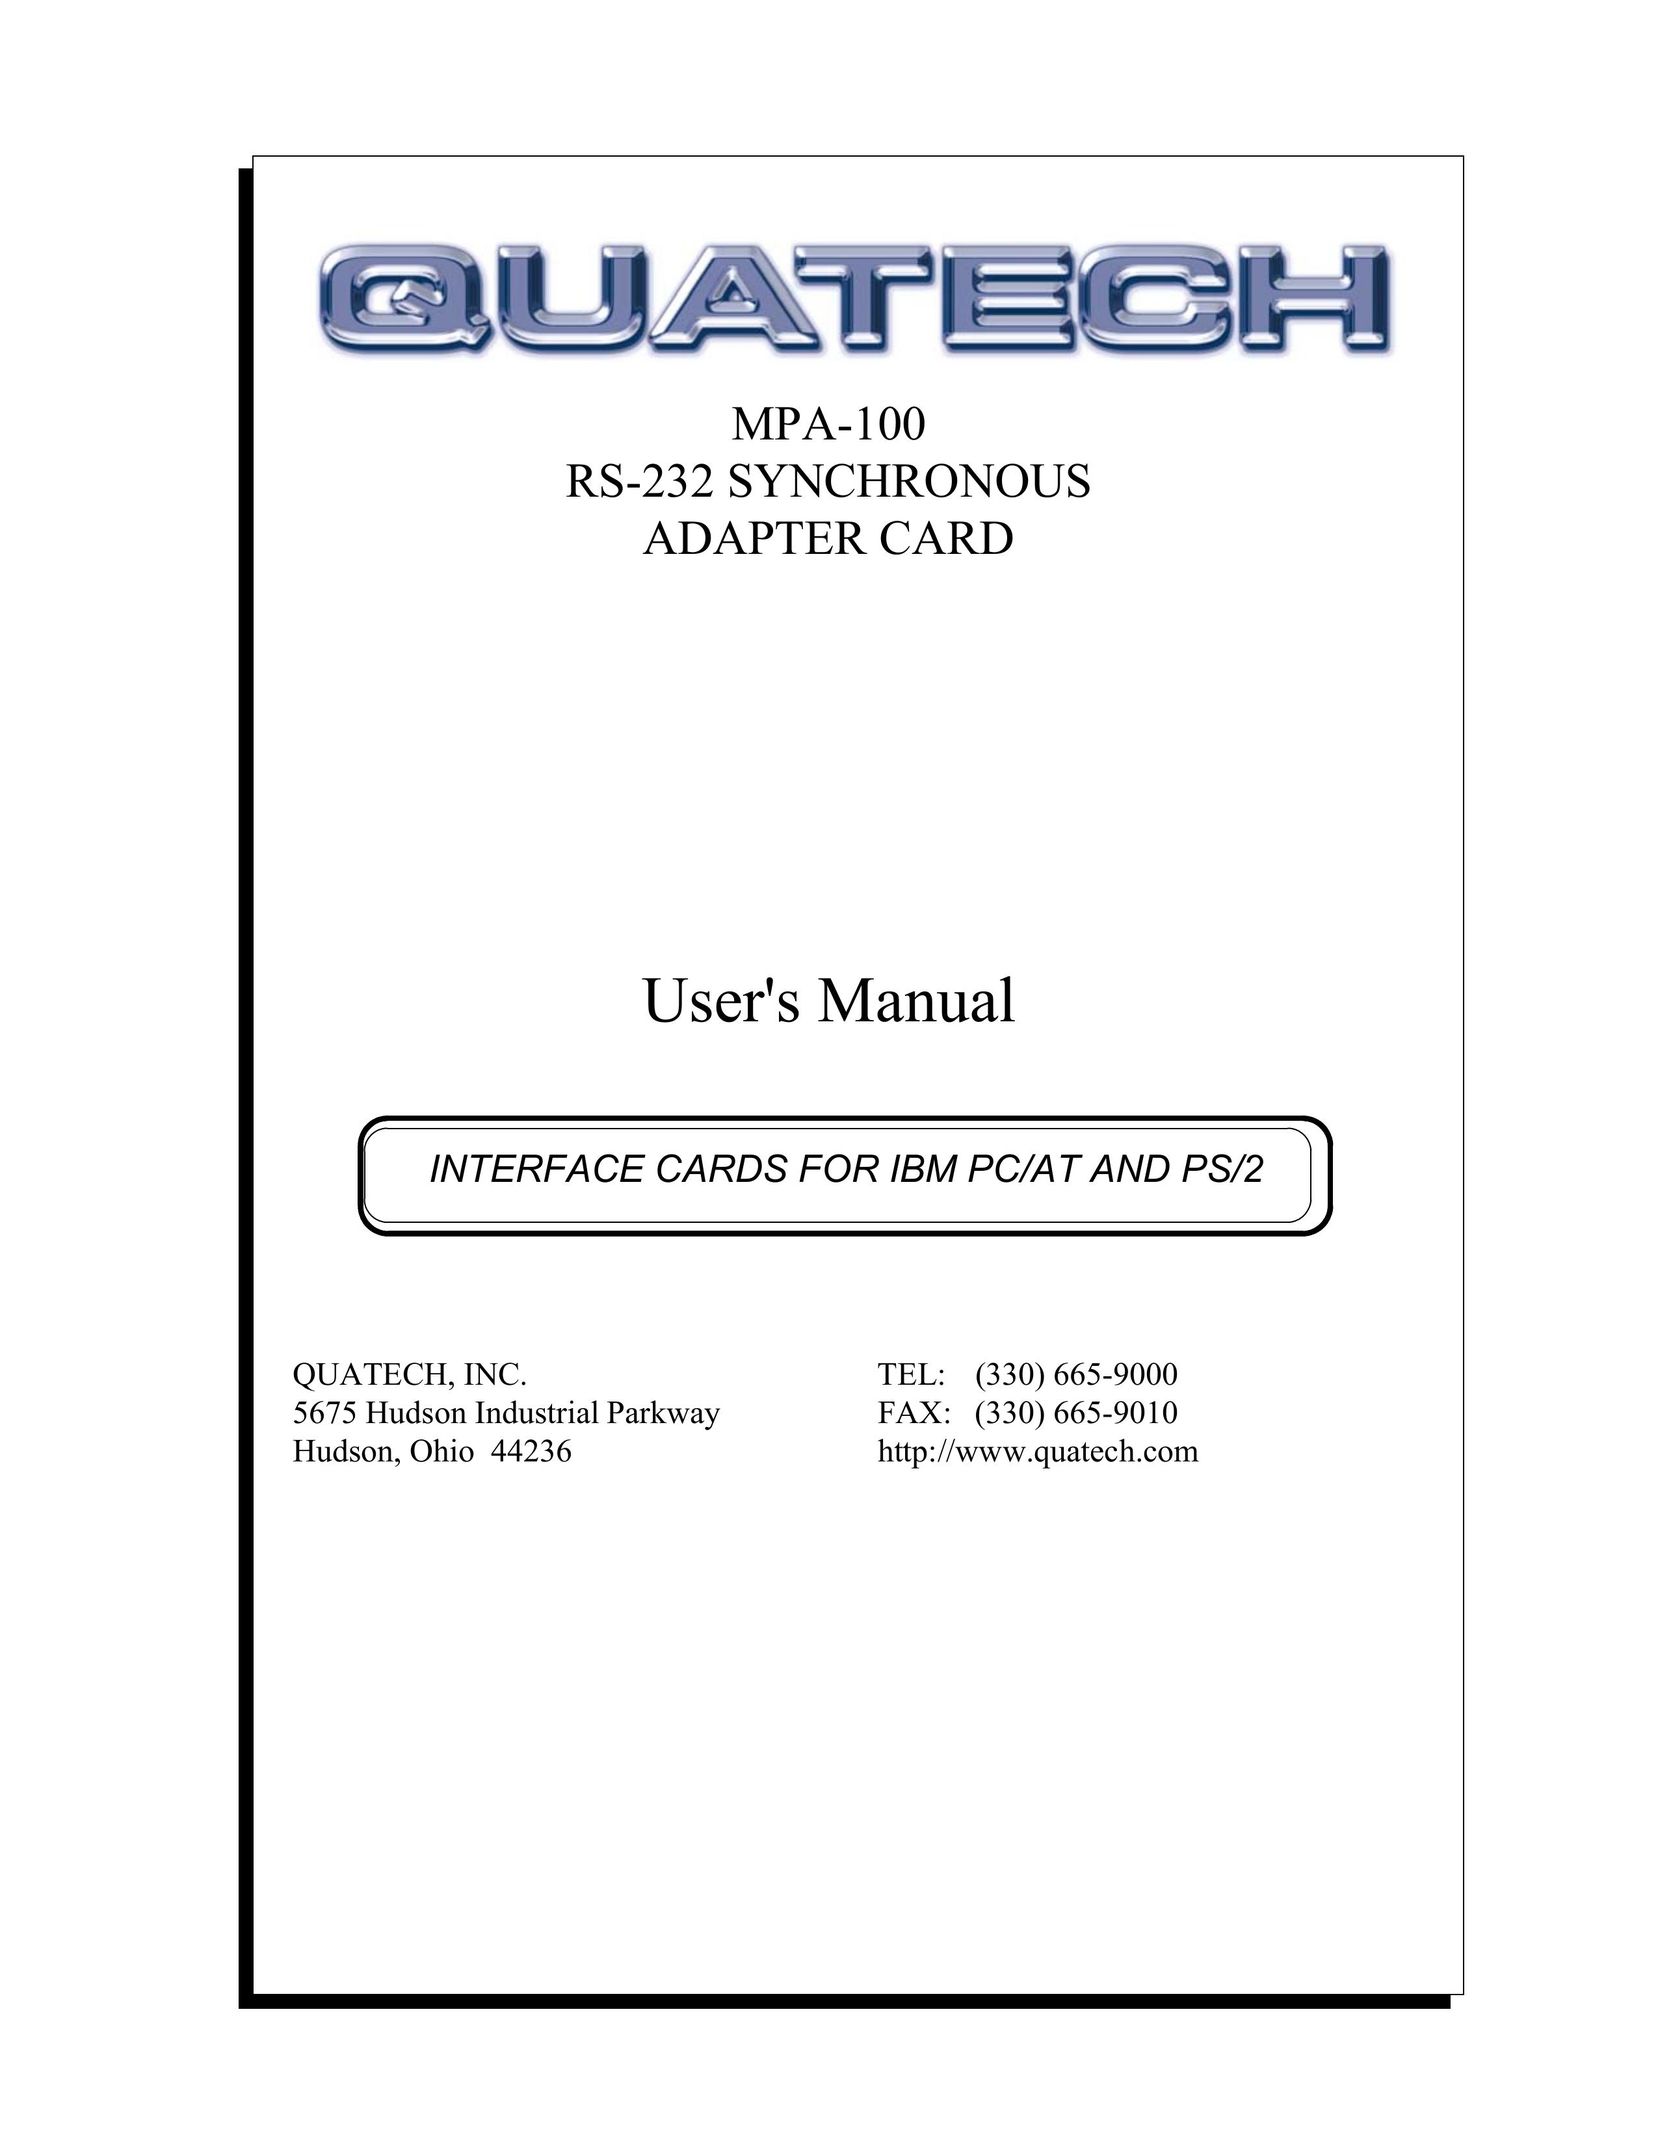 Quatech MPA-100 Network Card User Manual